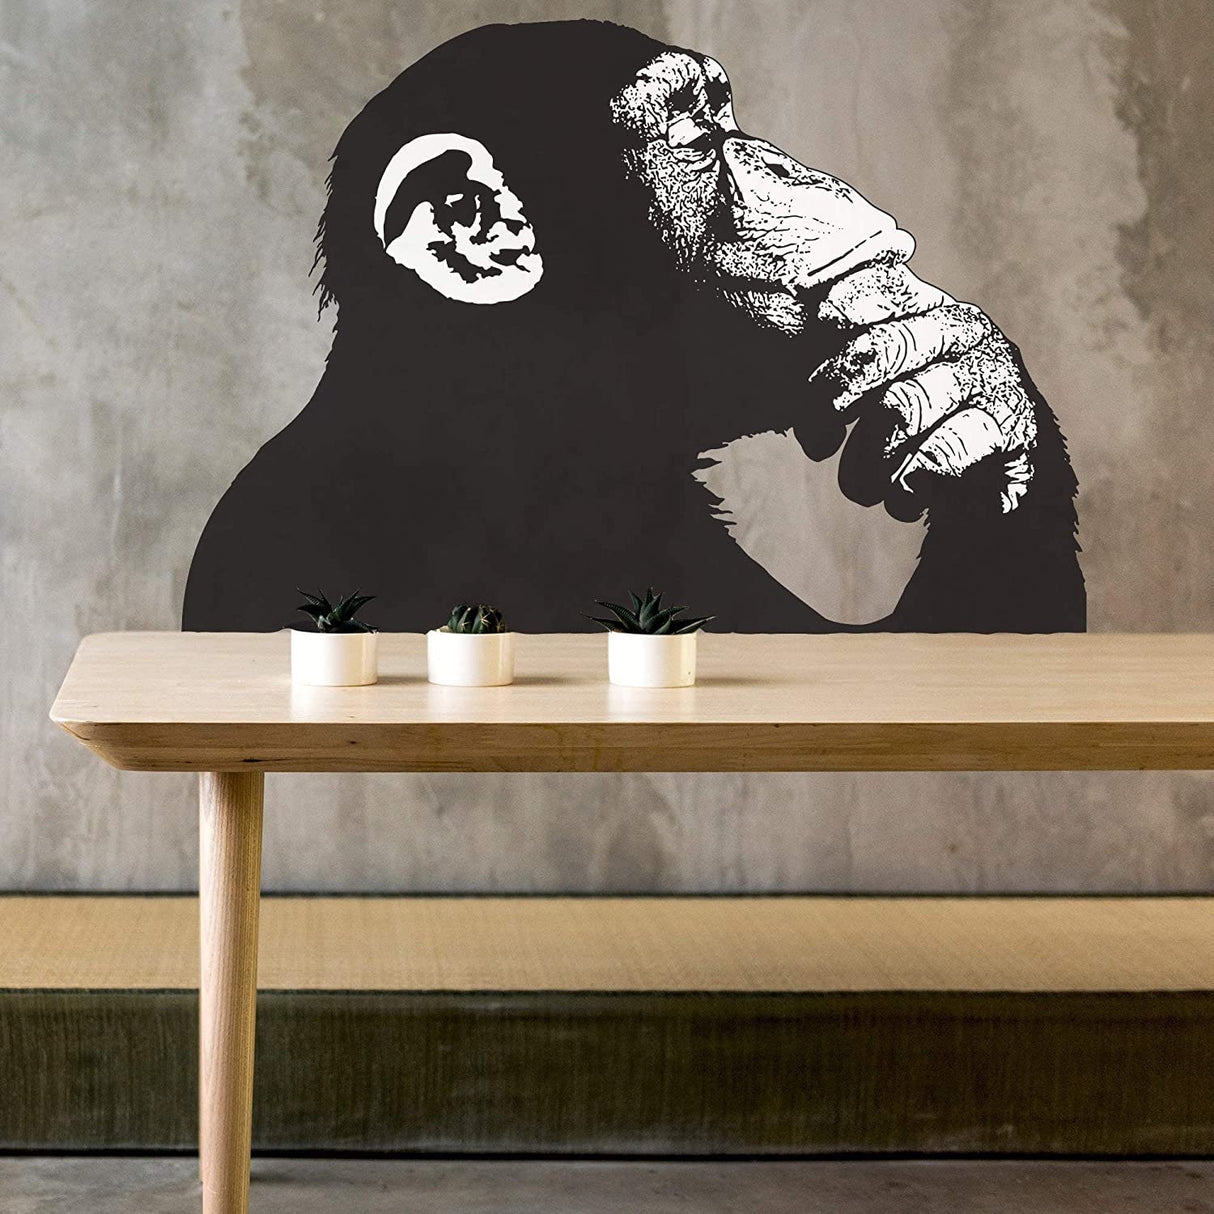 Banksy Monkey With Headphones Wall Sticker - Large Bansky Thinking Dj Chimp Vinyl Decal